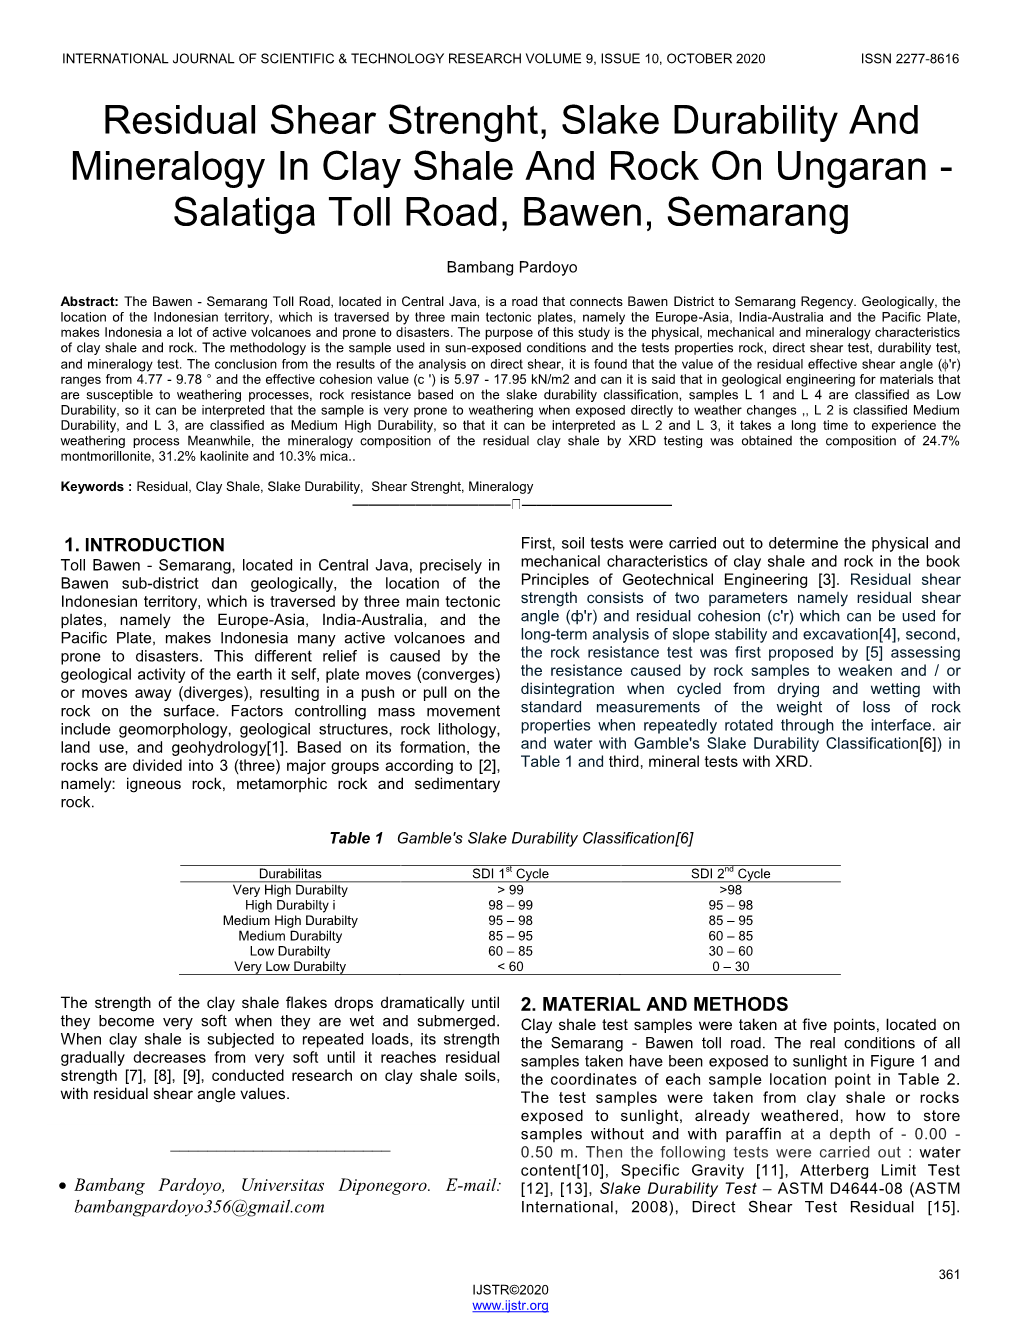 Residual Shear Strenght, Slake Durability and Mineralogy in Clay Shale and Rock on Ungaran - Salatiga Toll Road, Bawen, Semarang